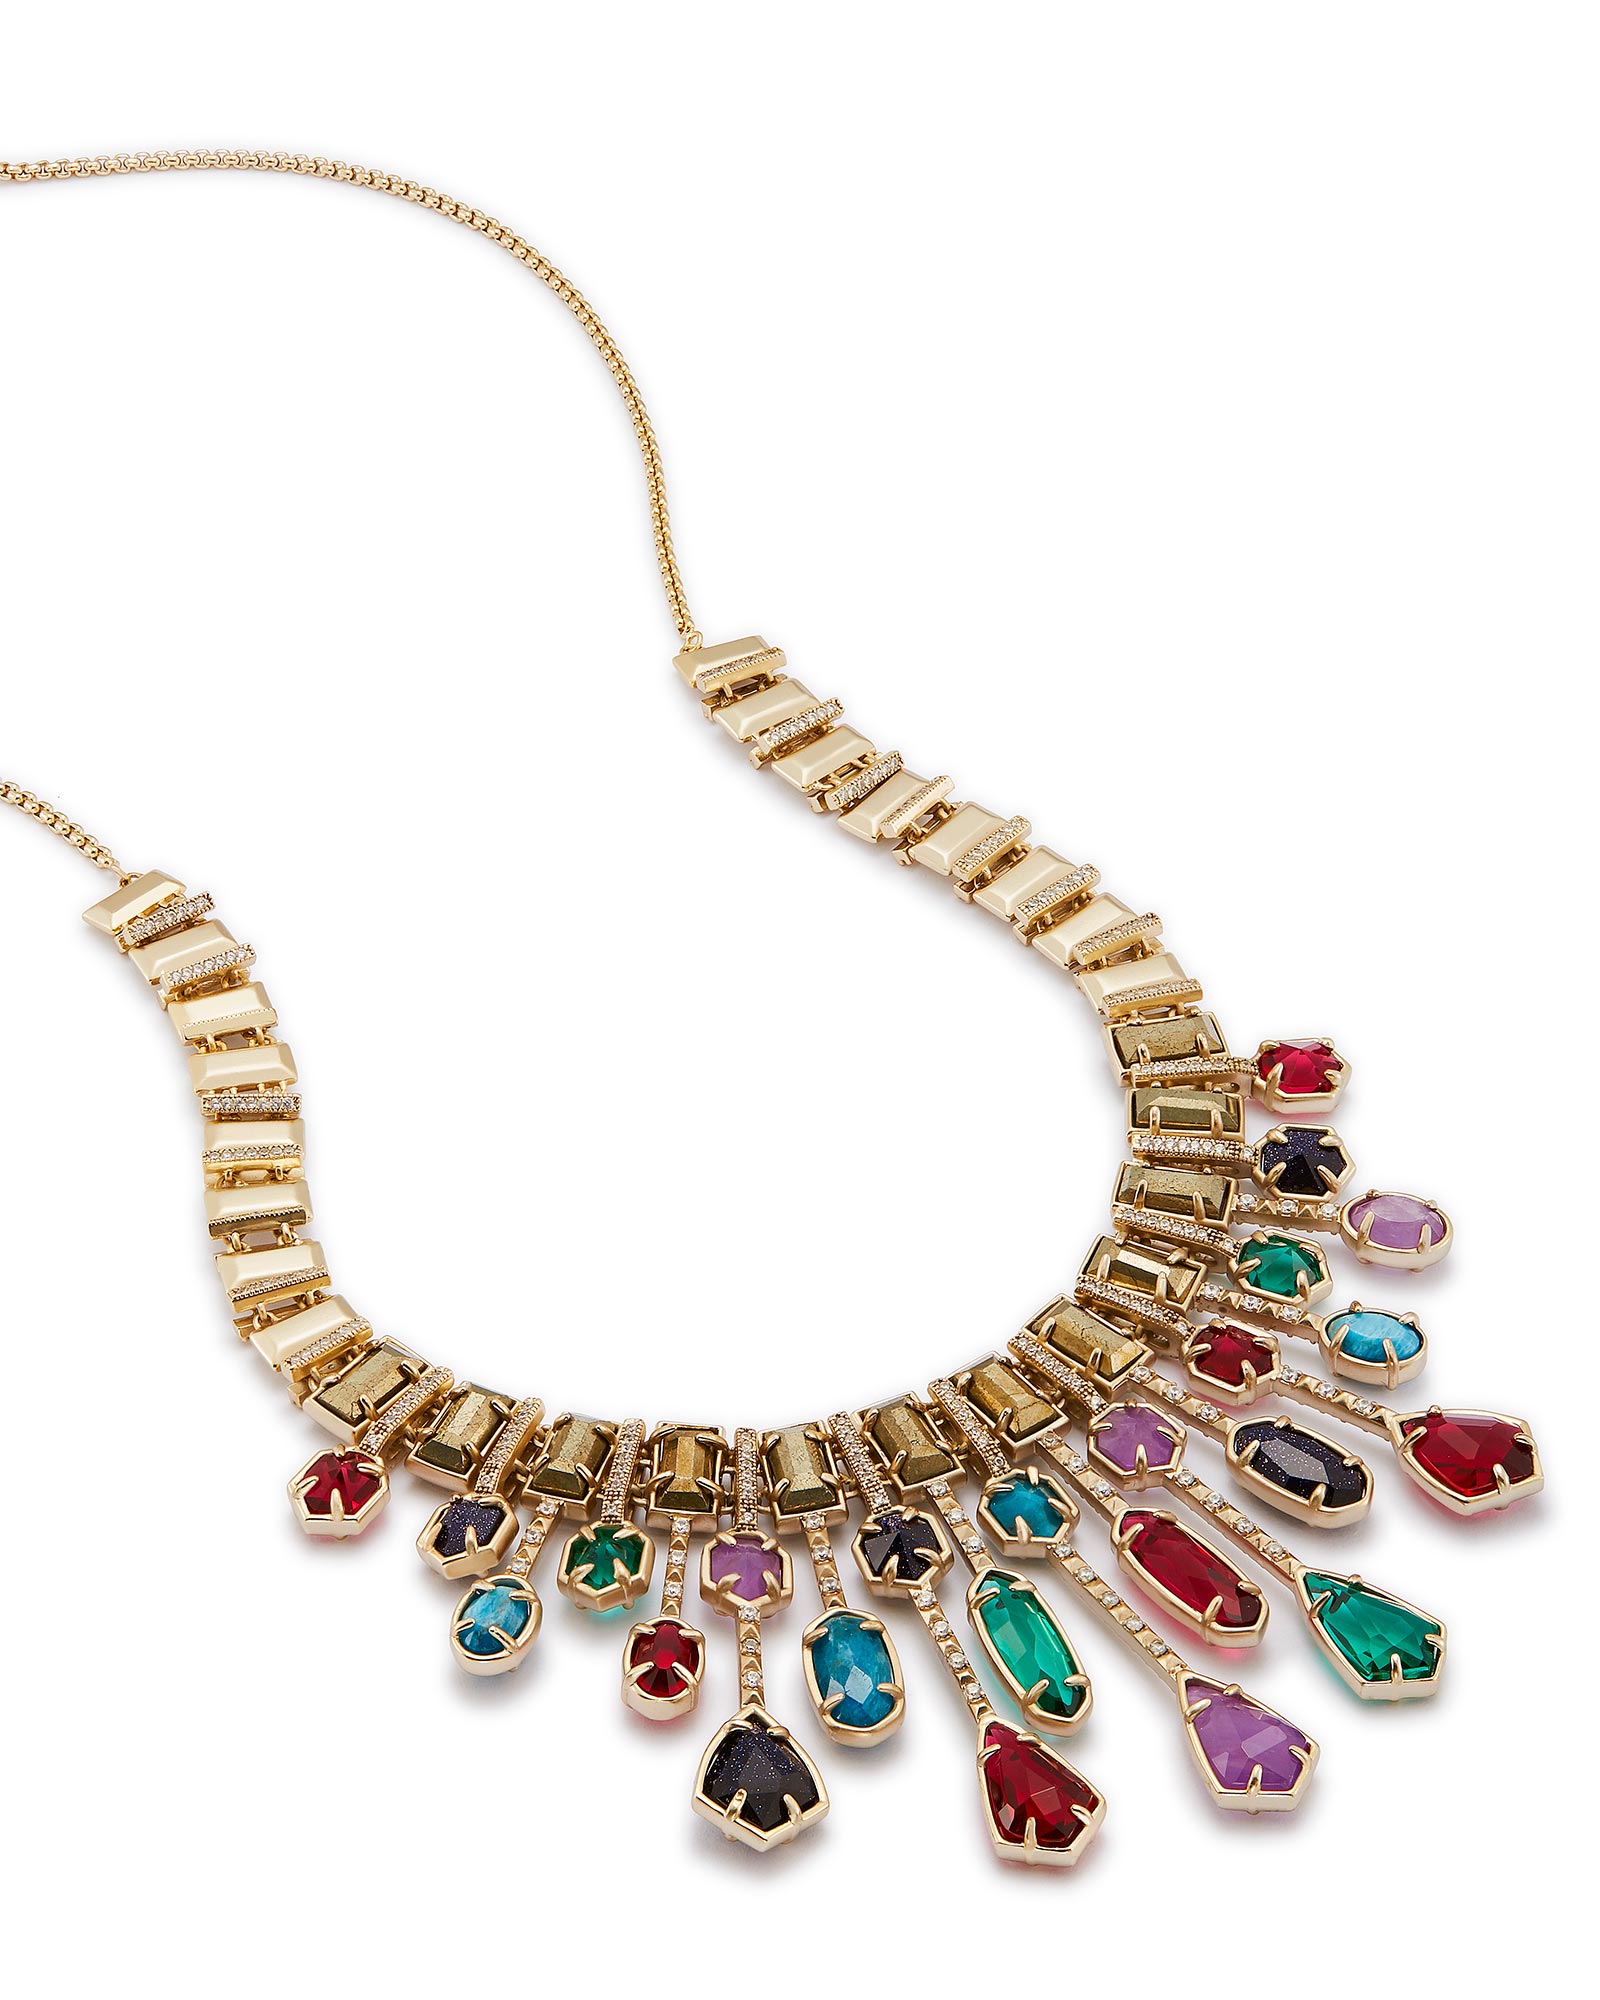 Bette Brass Statement Necklace in Jewel Tones | Kendra Scott